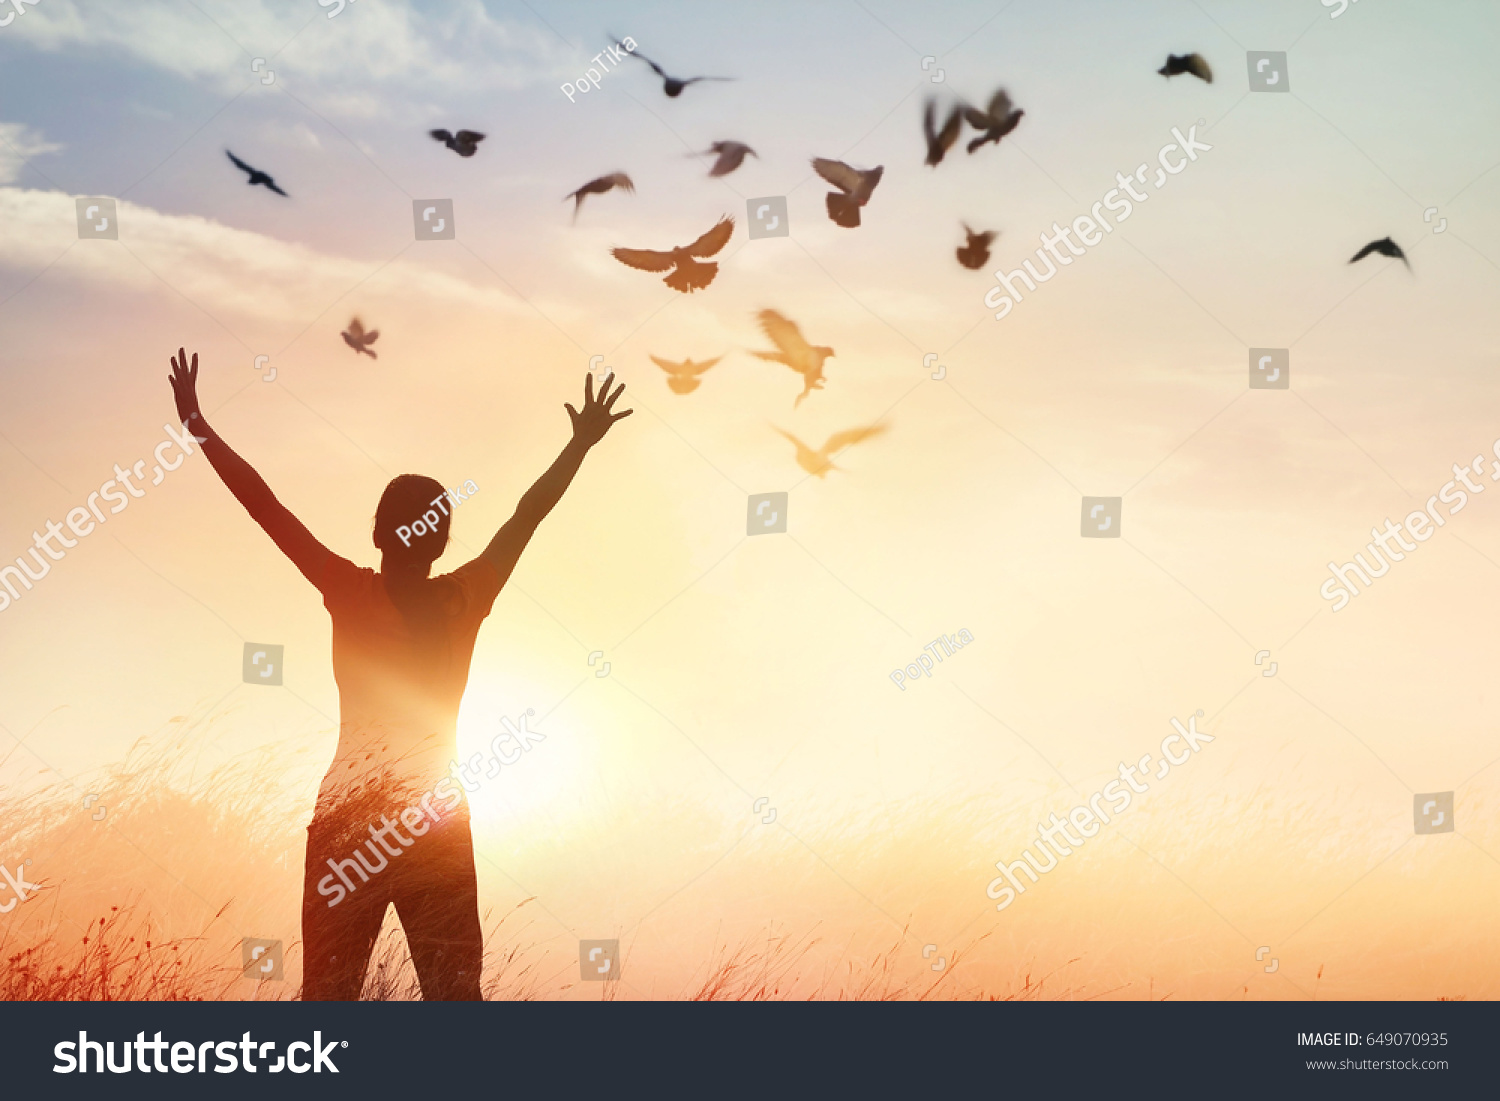 Woman praying and free bird enjoying nature on sunset background, hope concept  #649070935